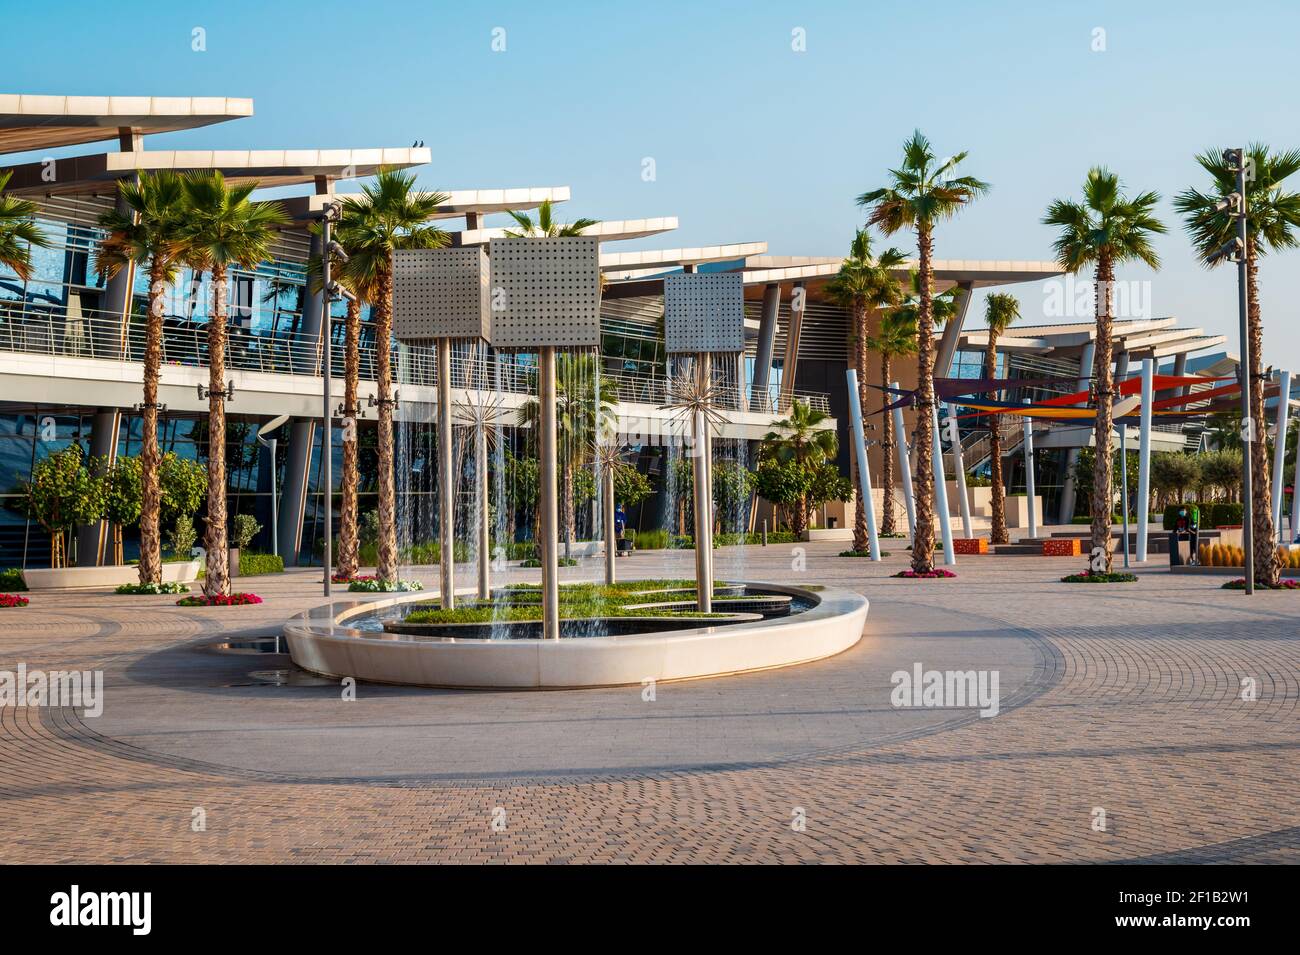 Ras al Khaimah, United Arab Emirates - January 24, 2021: New public walking and leisure area in Mannar mall by the Ras Al Khaimah corniche in the hear Stock Photo